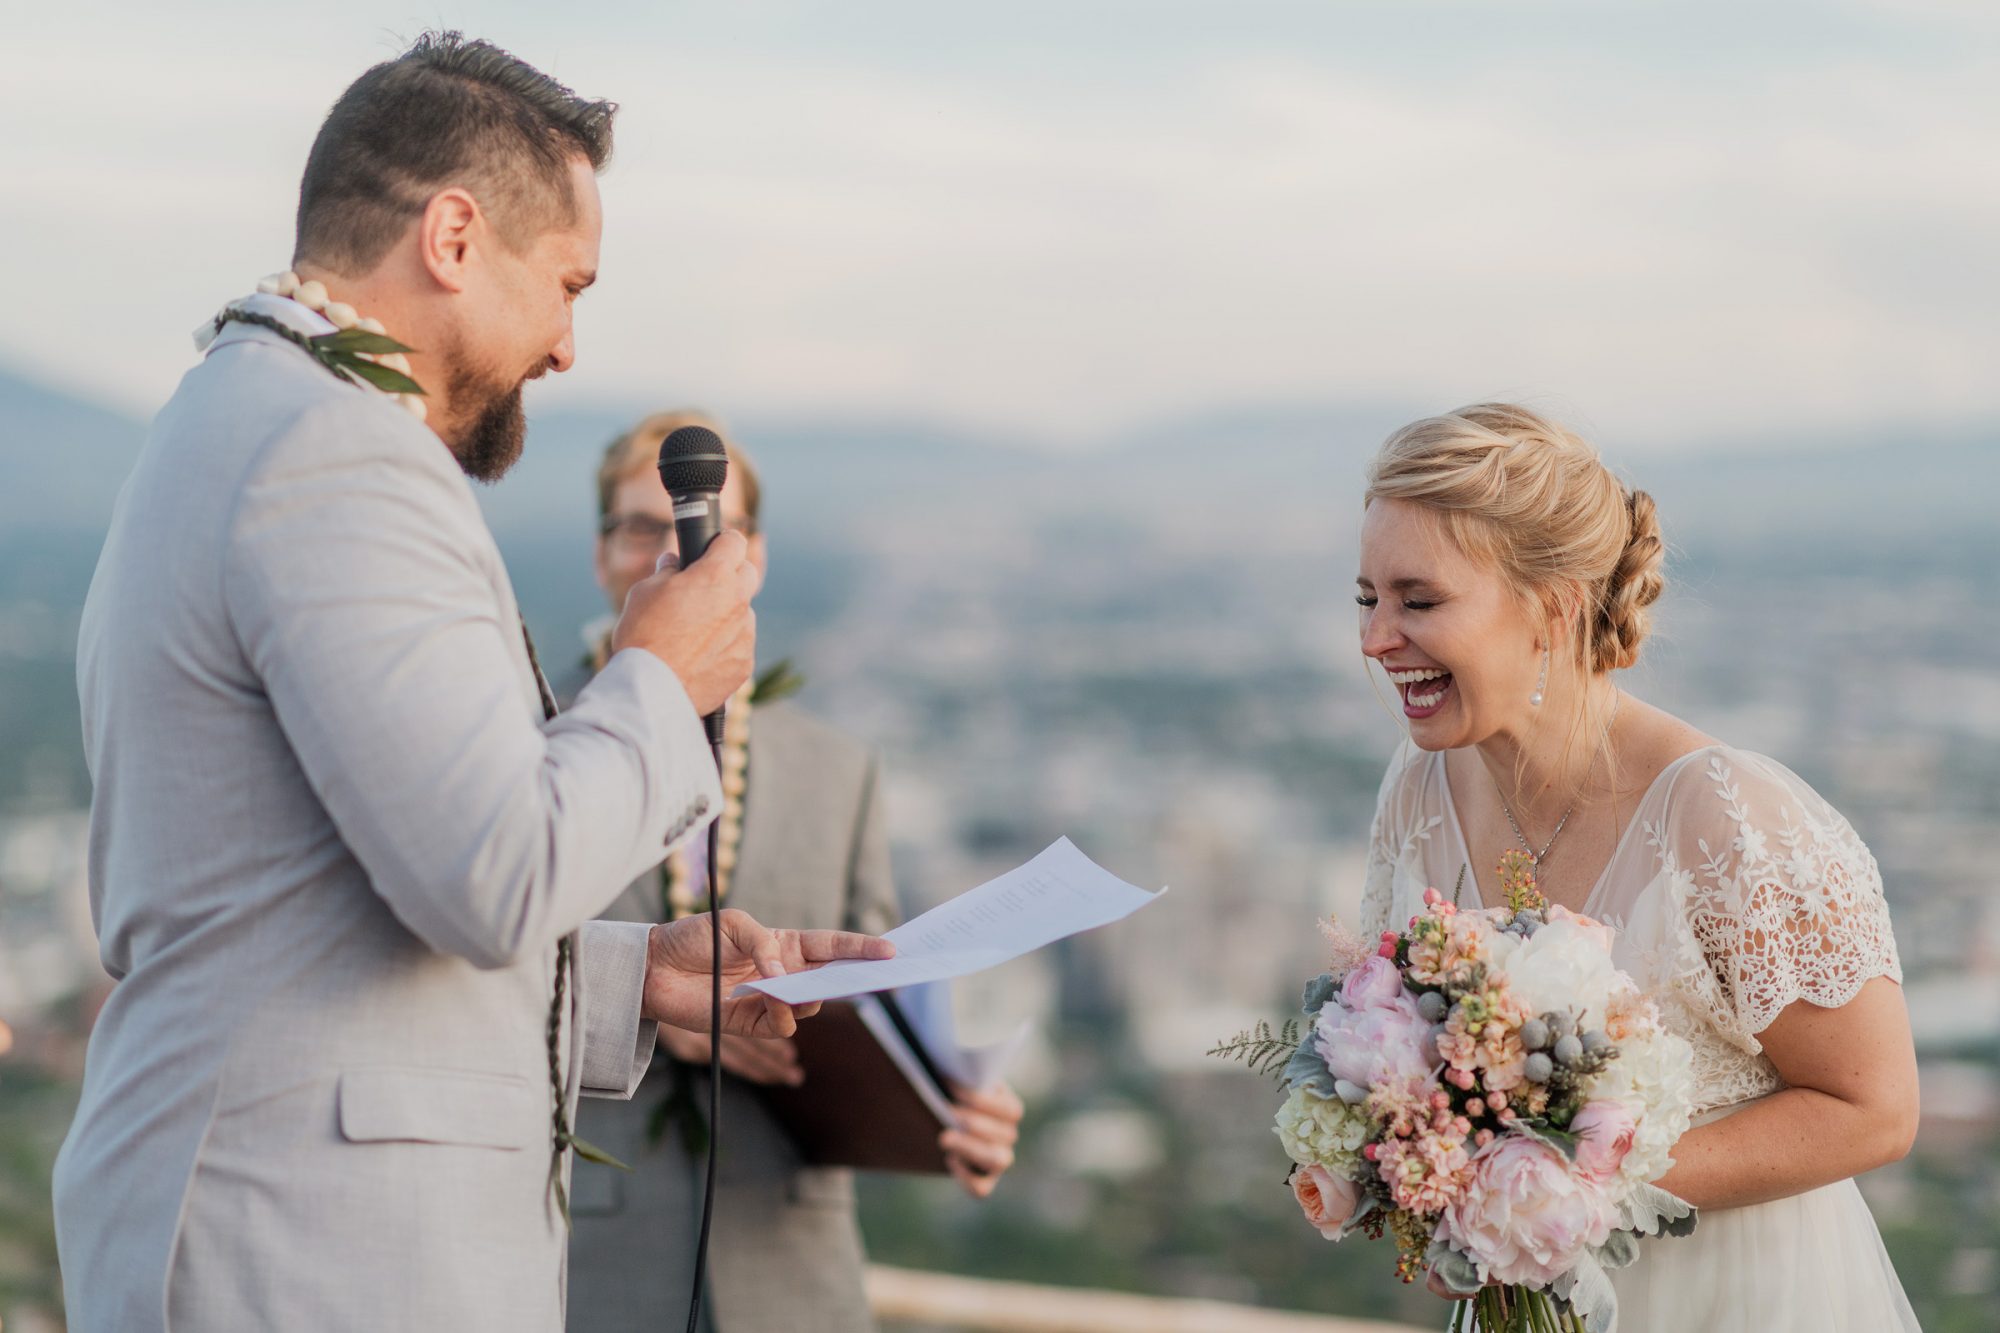 Ensign Peak wedding photography by Rachel Nielsen